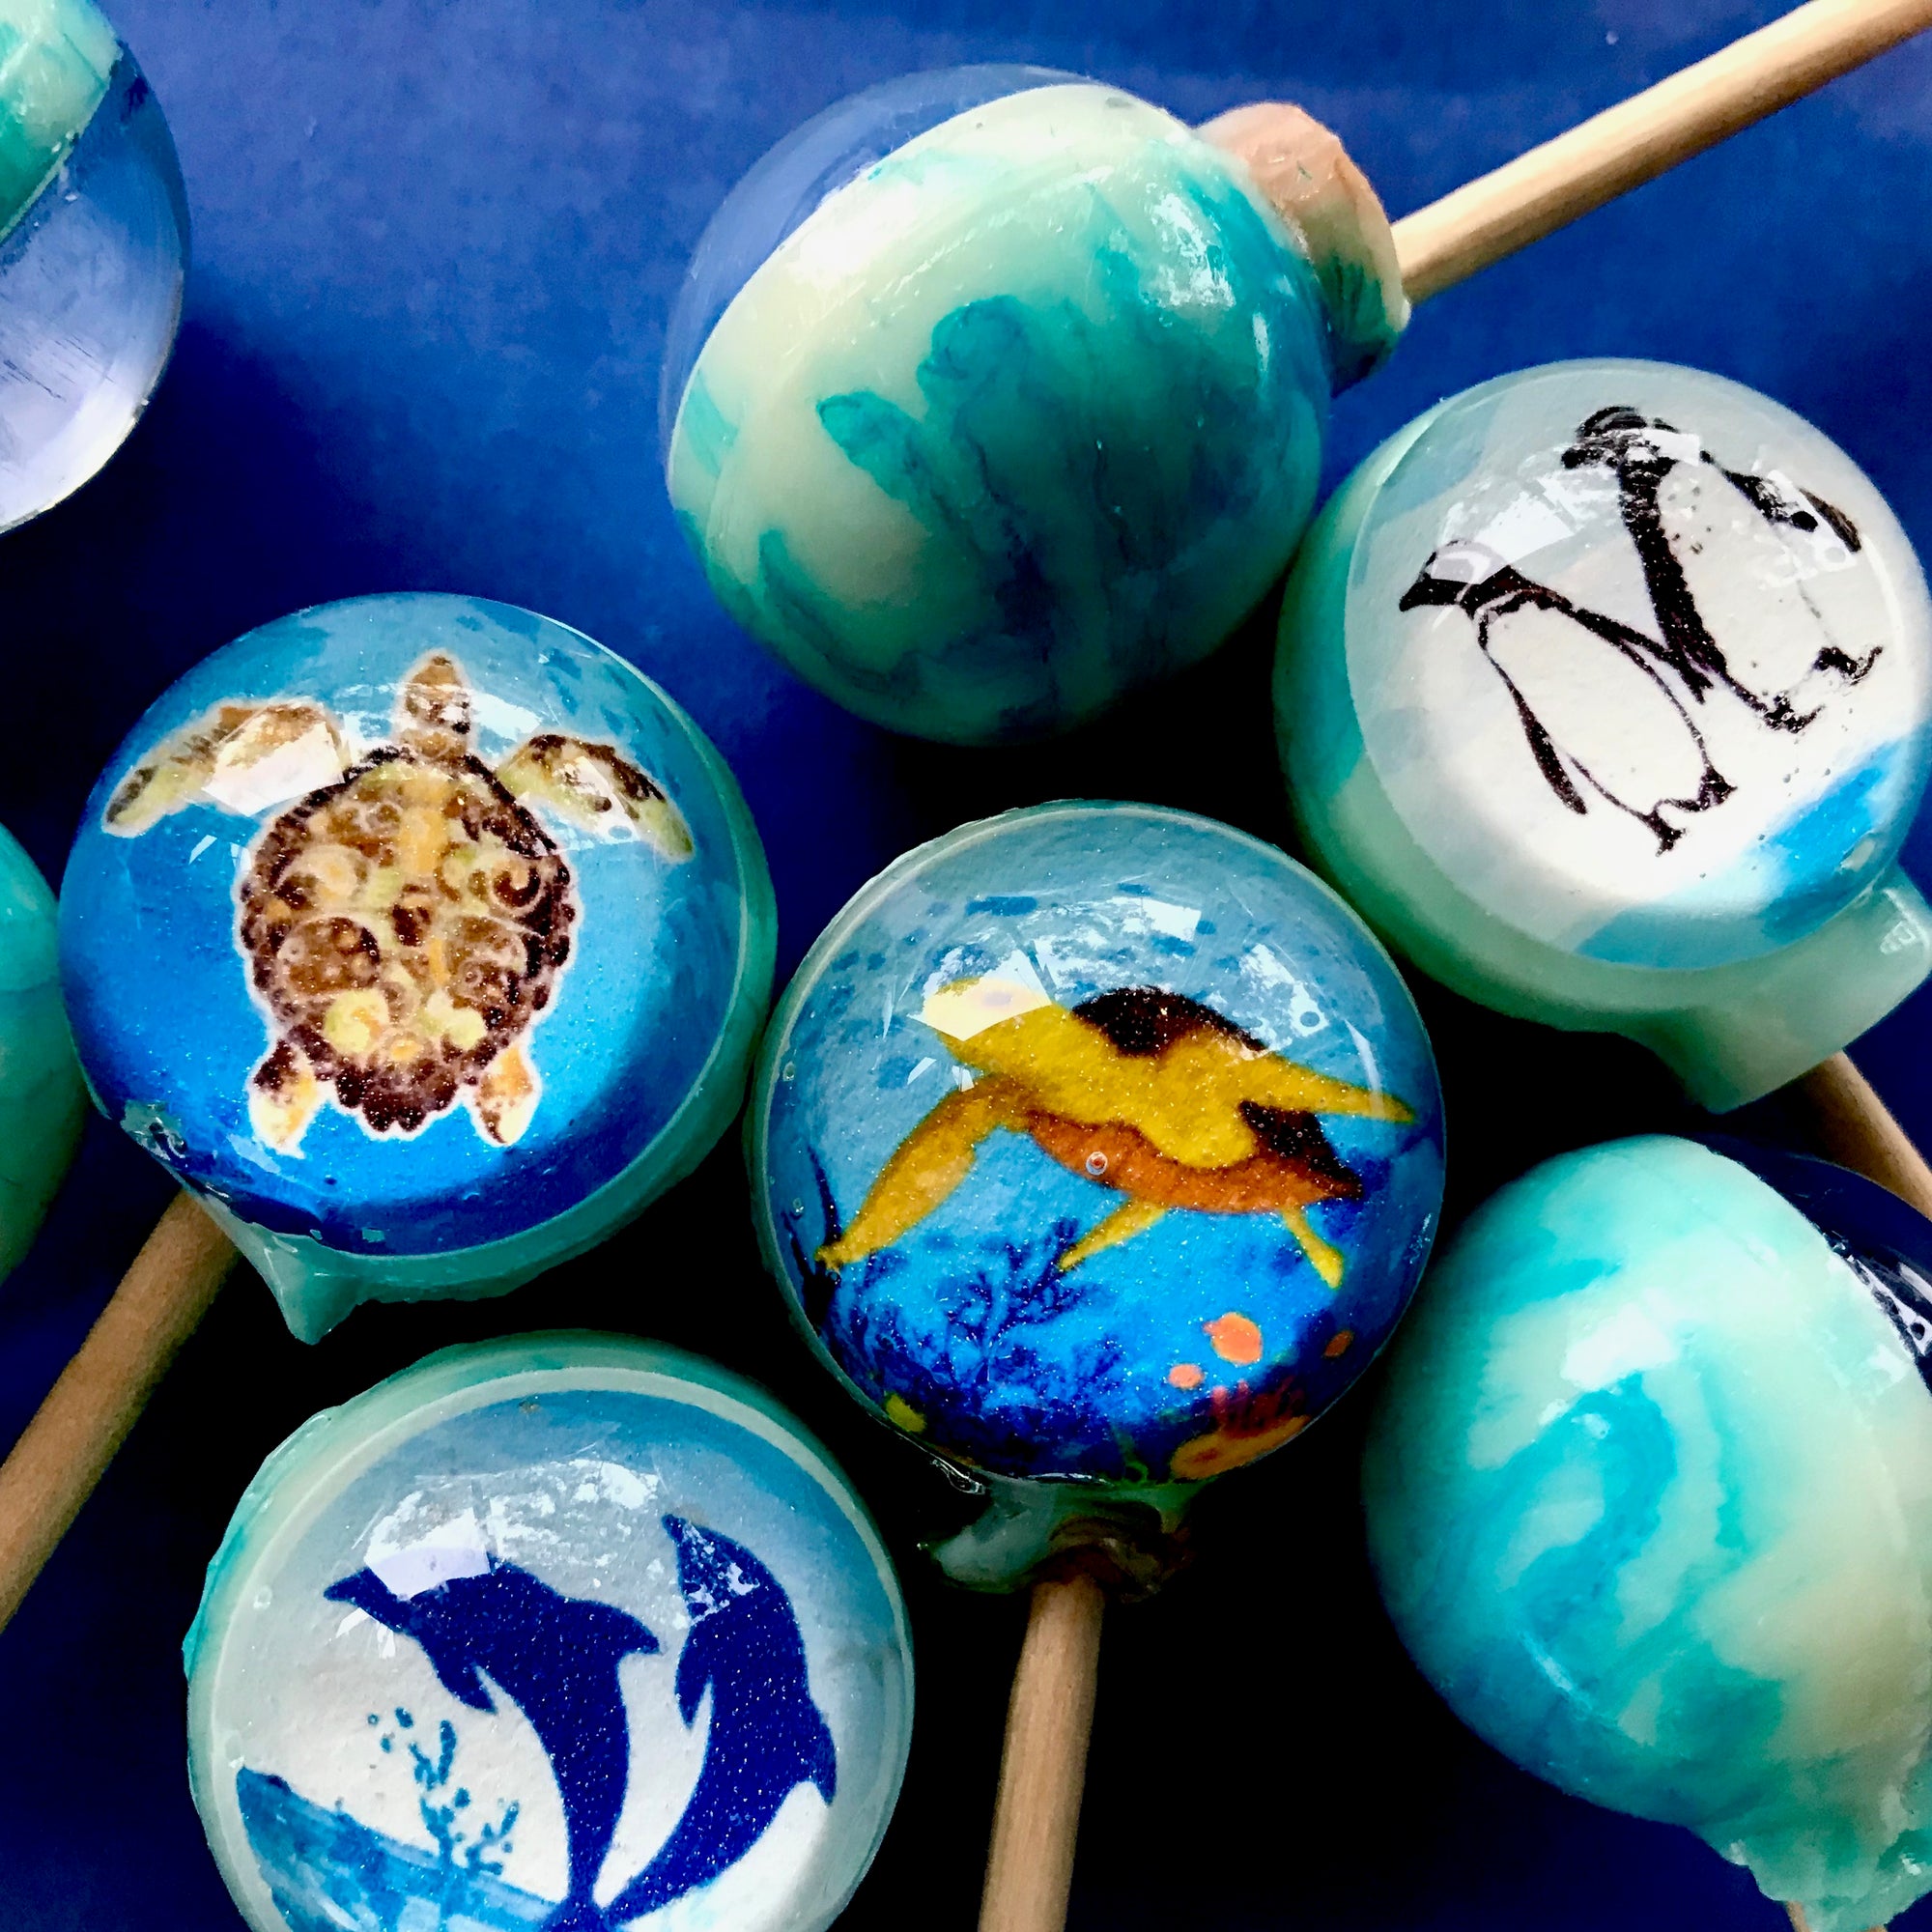 Aquatic Life Lollipops 6-piece set by I Want Candy!